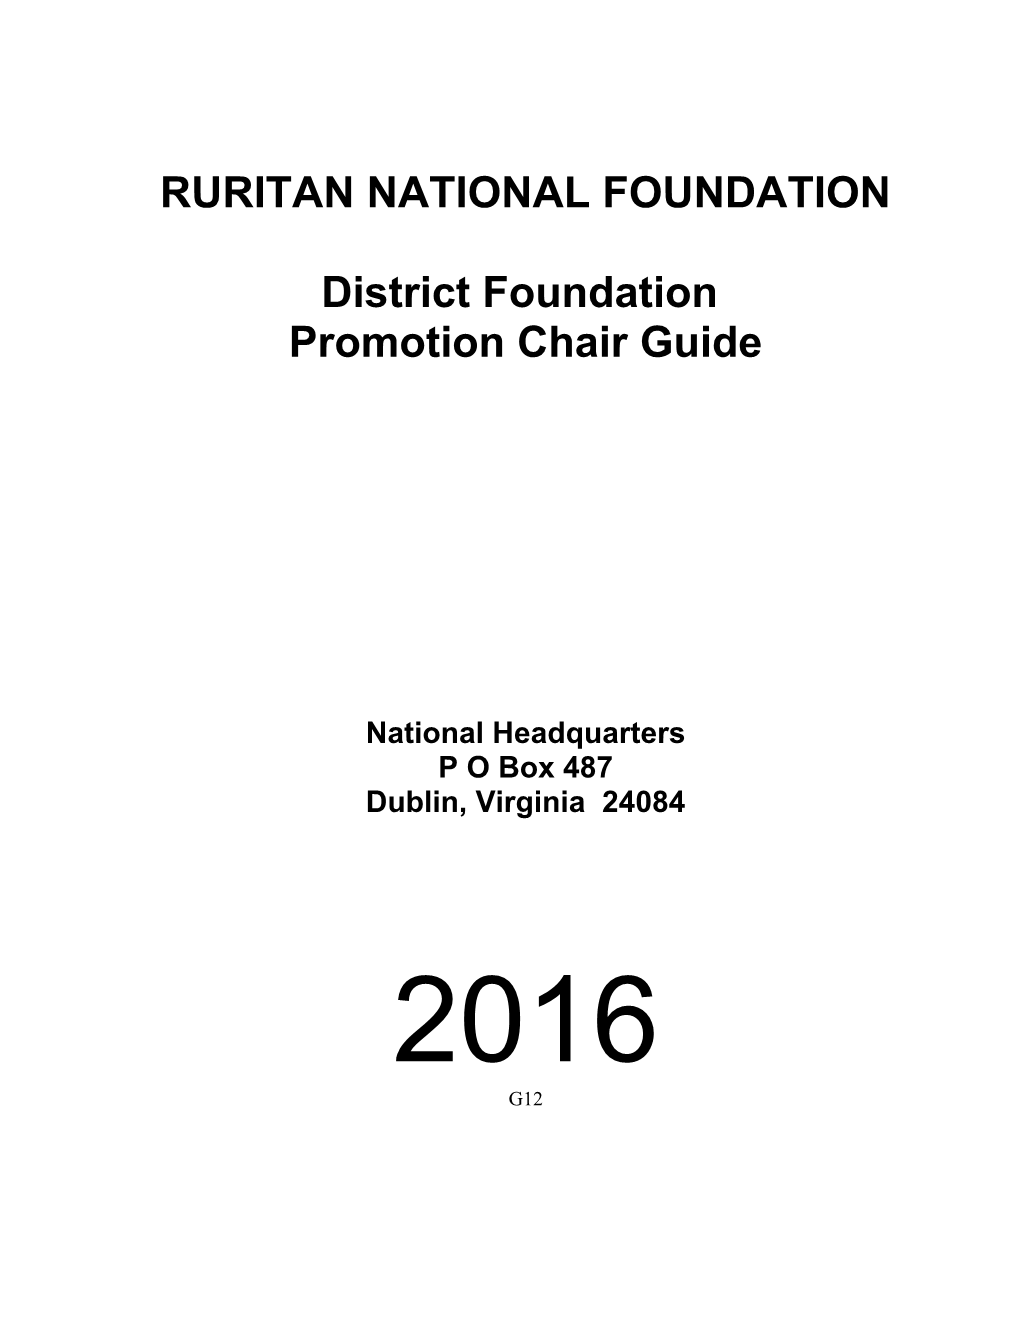 Ruritan National Foundation